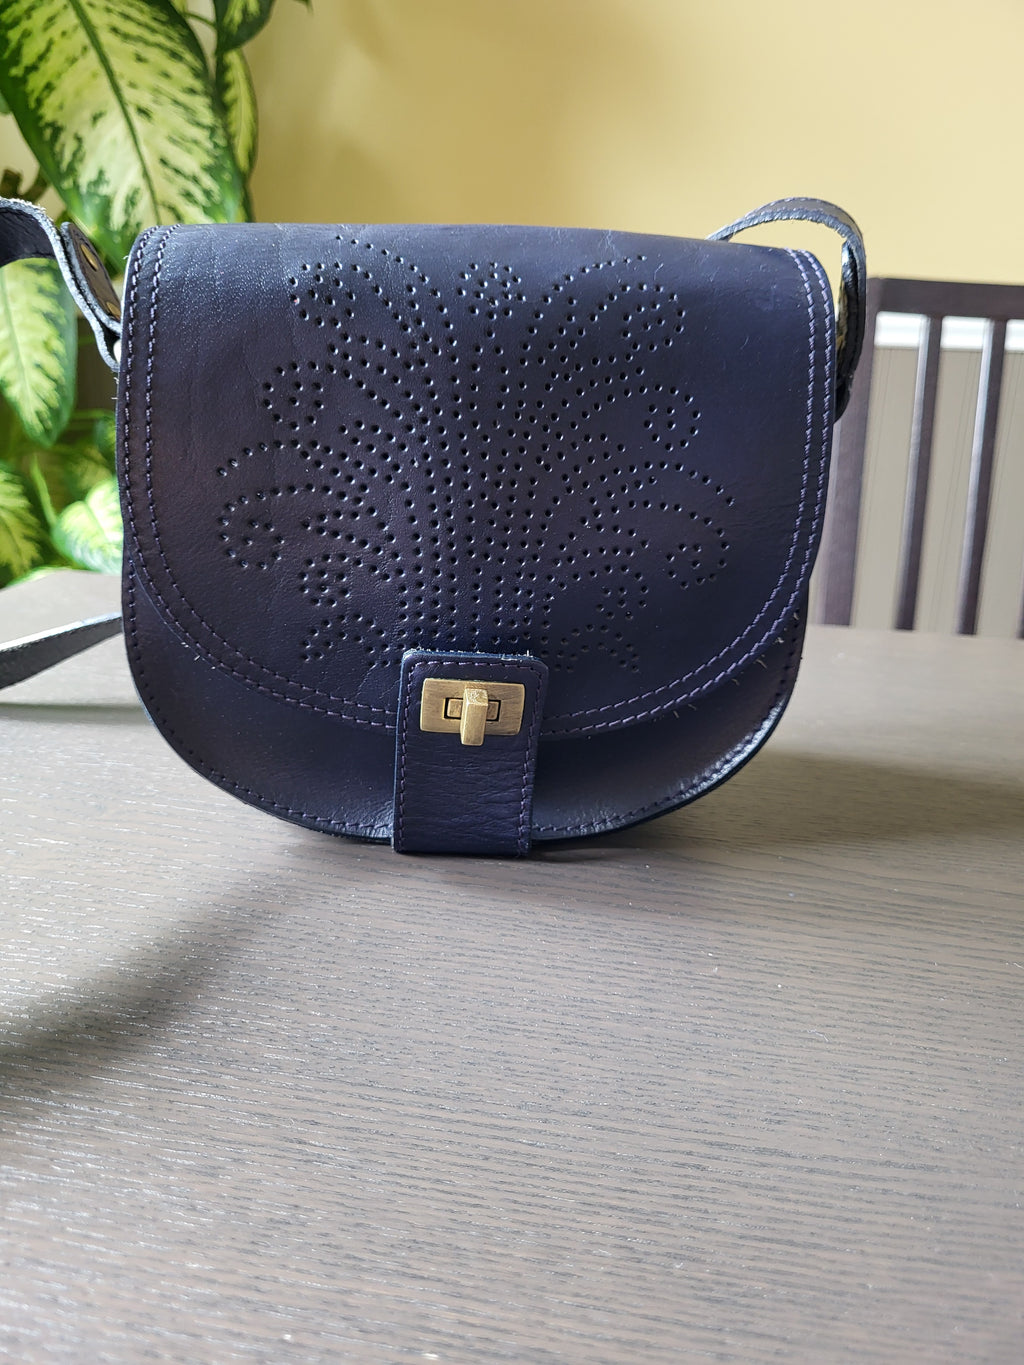 Zara Blue Leather Shoulder/Crossbody Bag